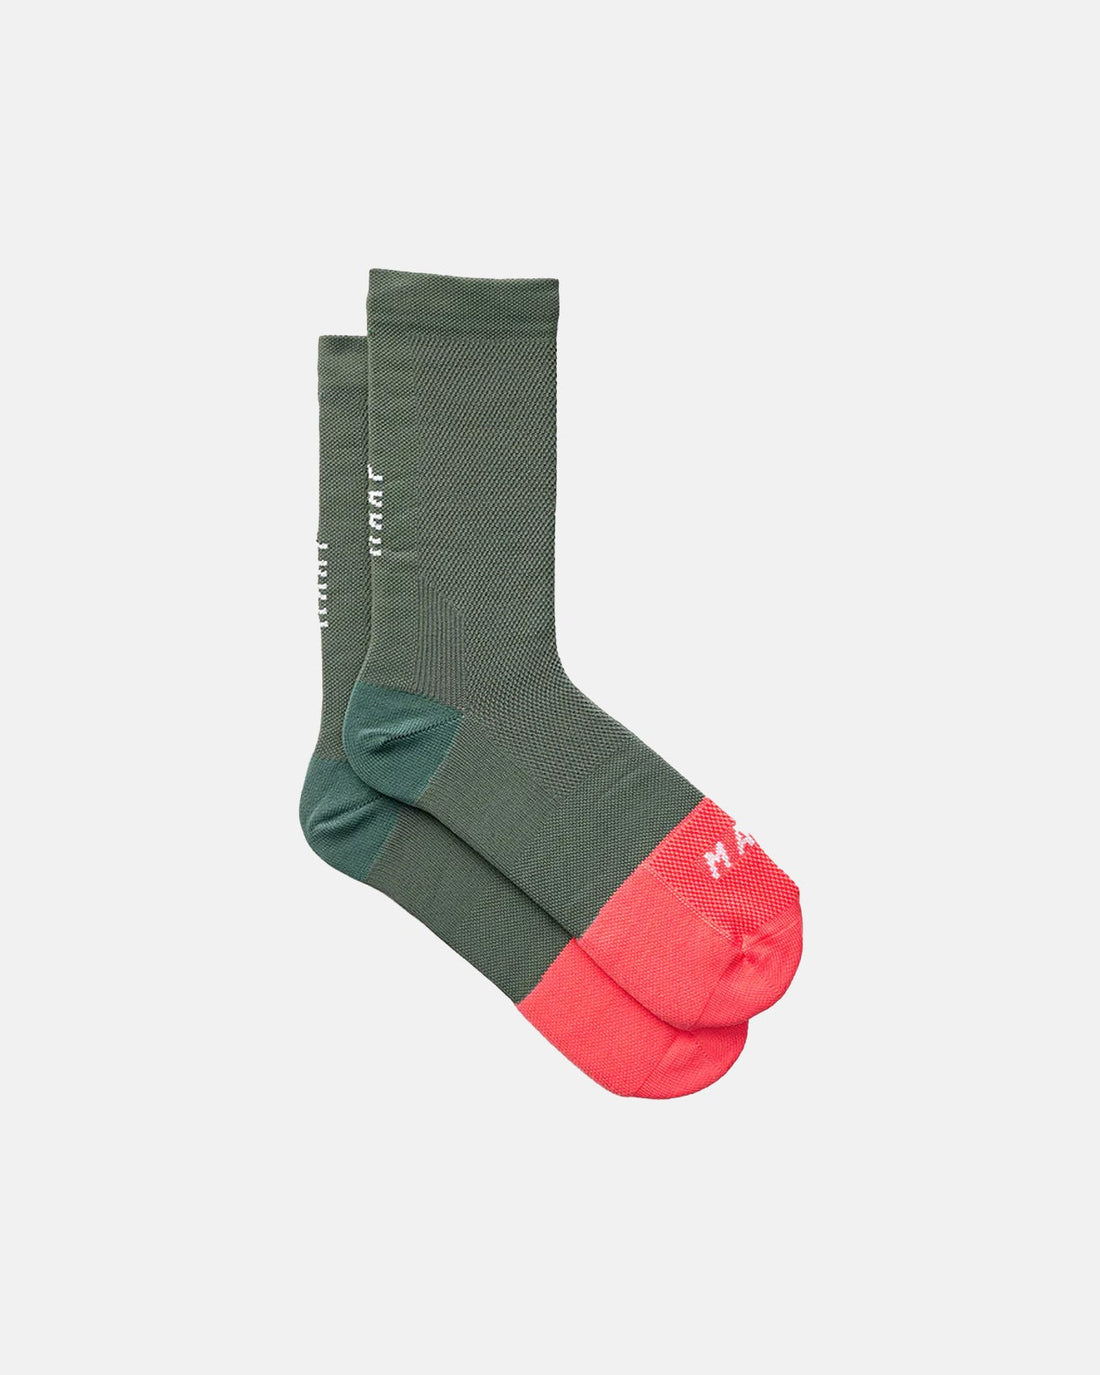 Division Sock - Artichoke